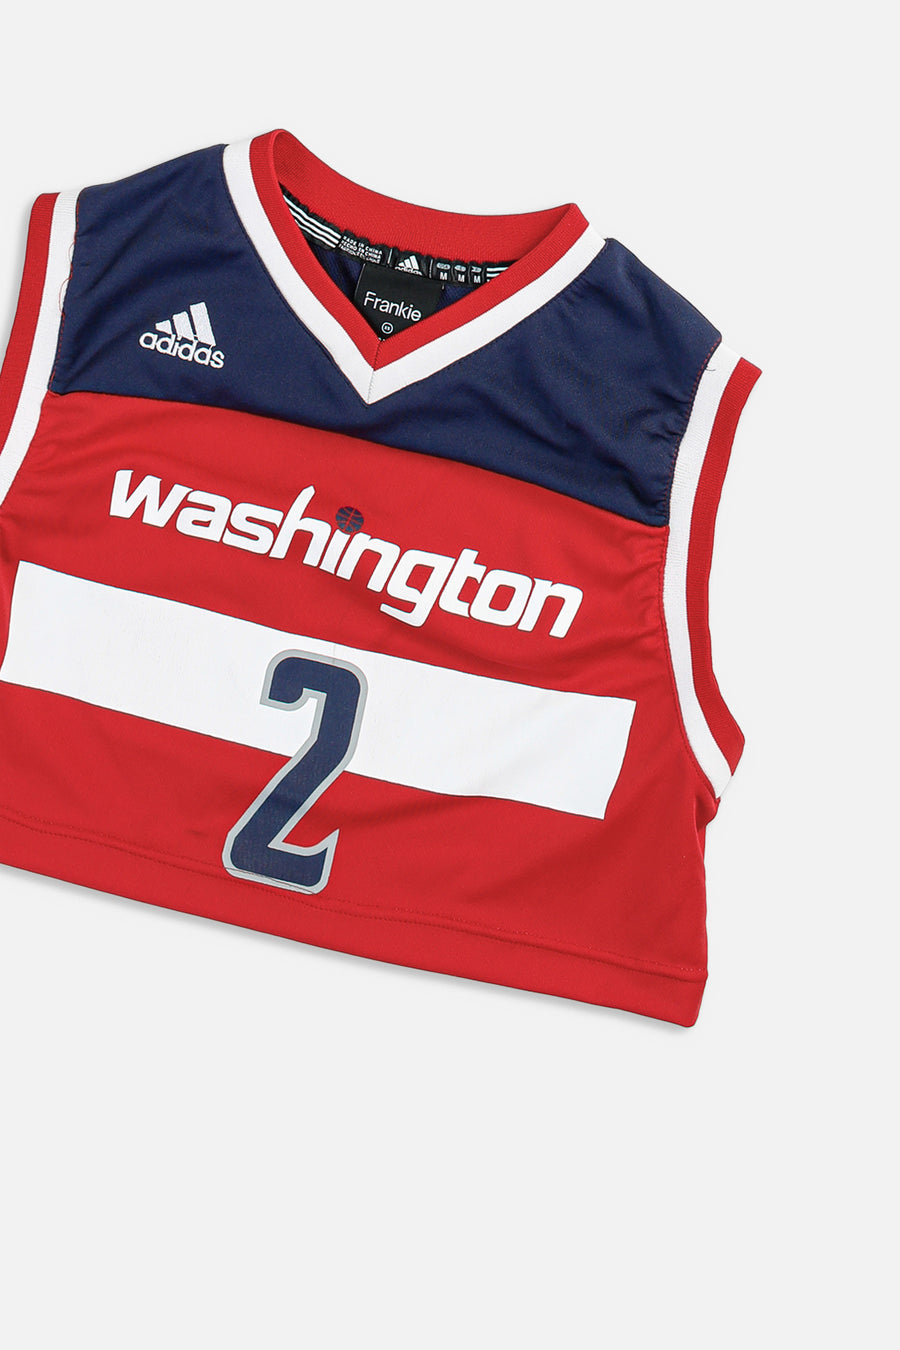 Rework Washington Wizards NBA Crop Jersey - XS